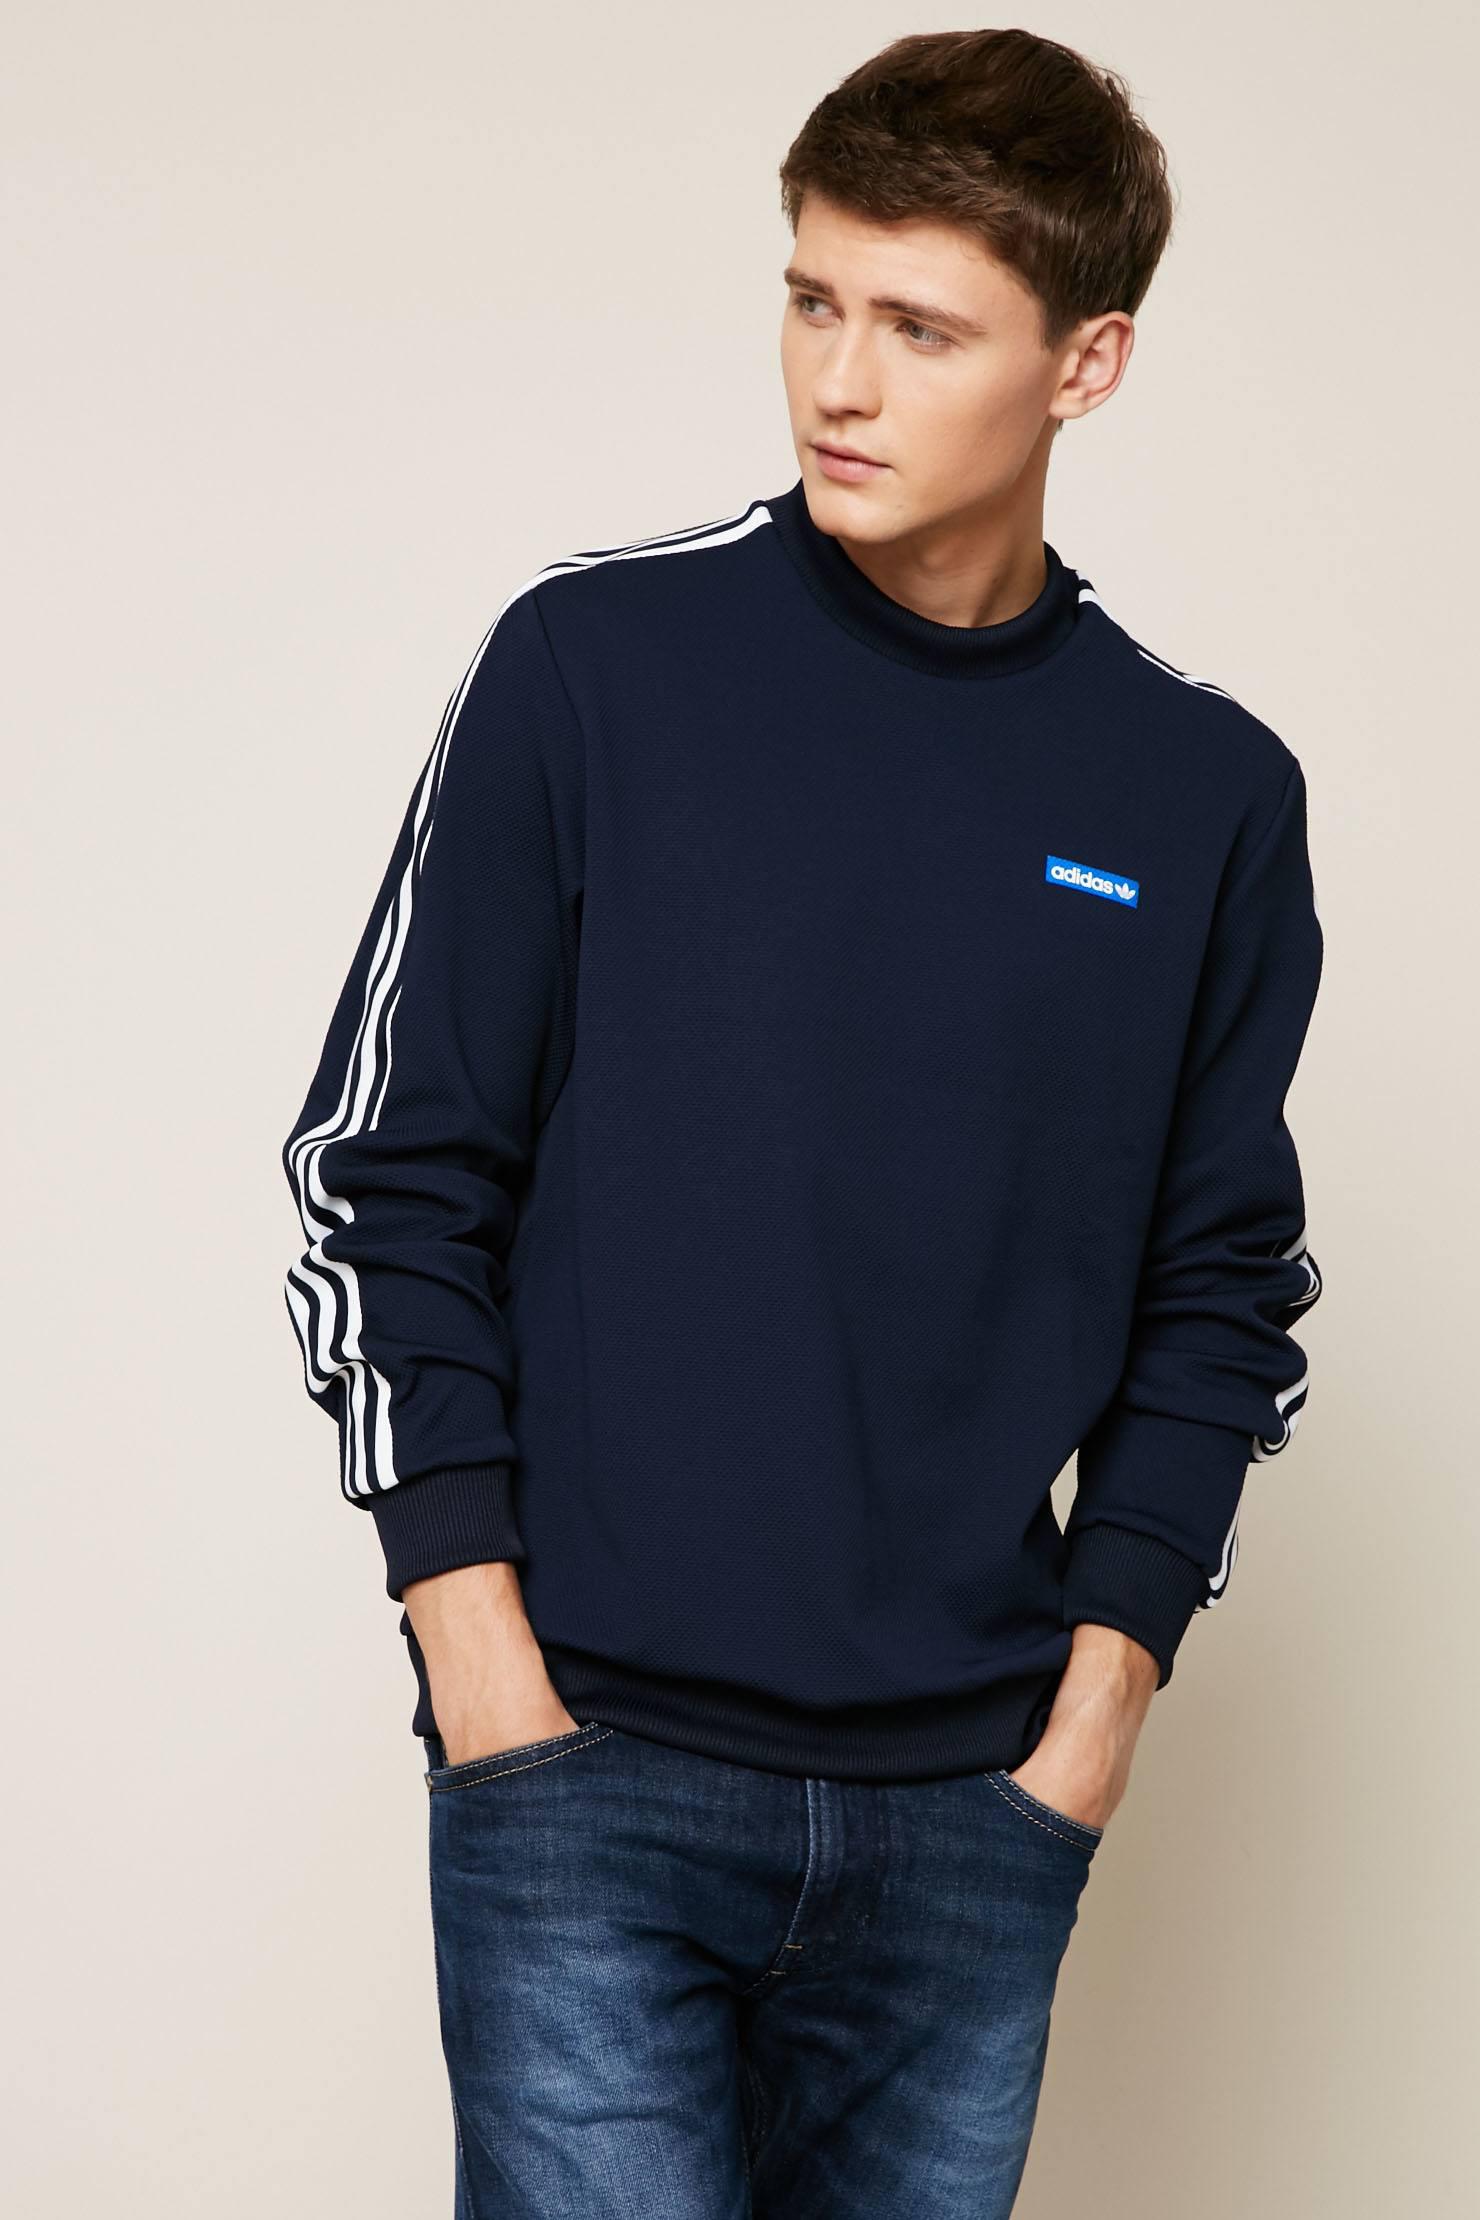 Lyst - Adidas Sweatshirt in Blue for Men